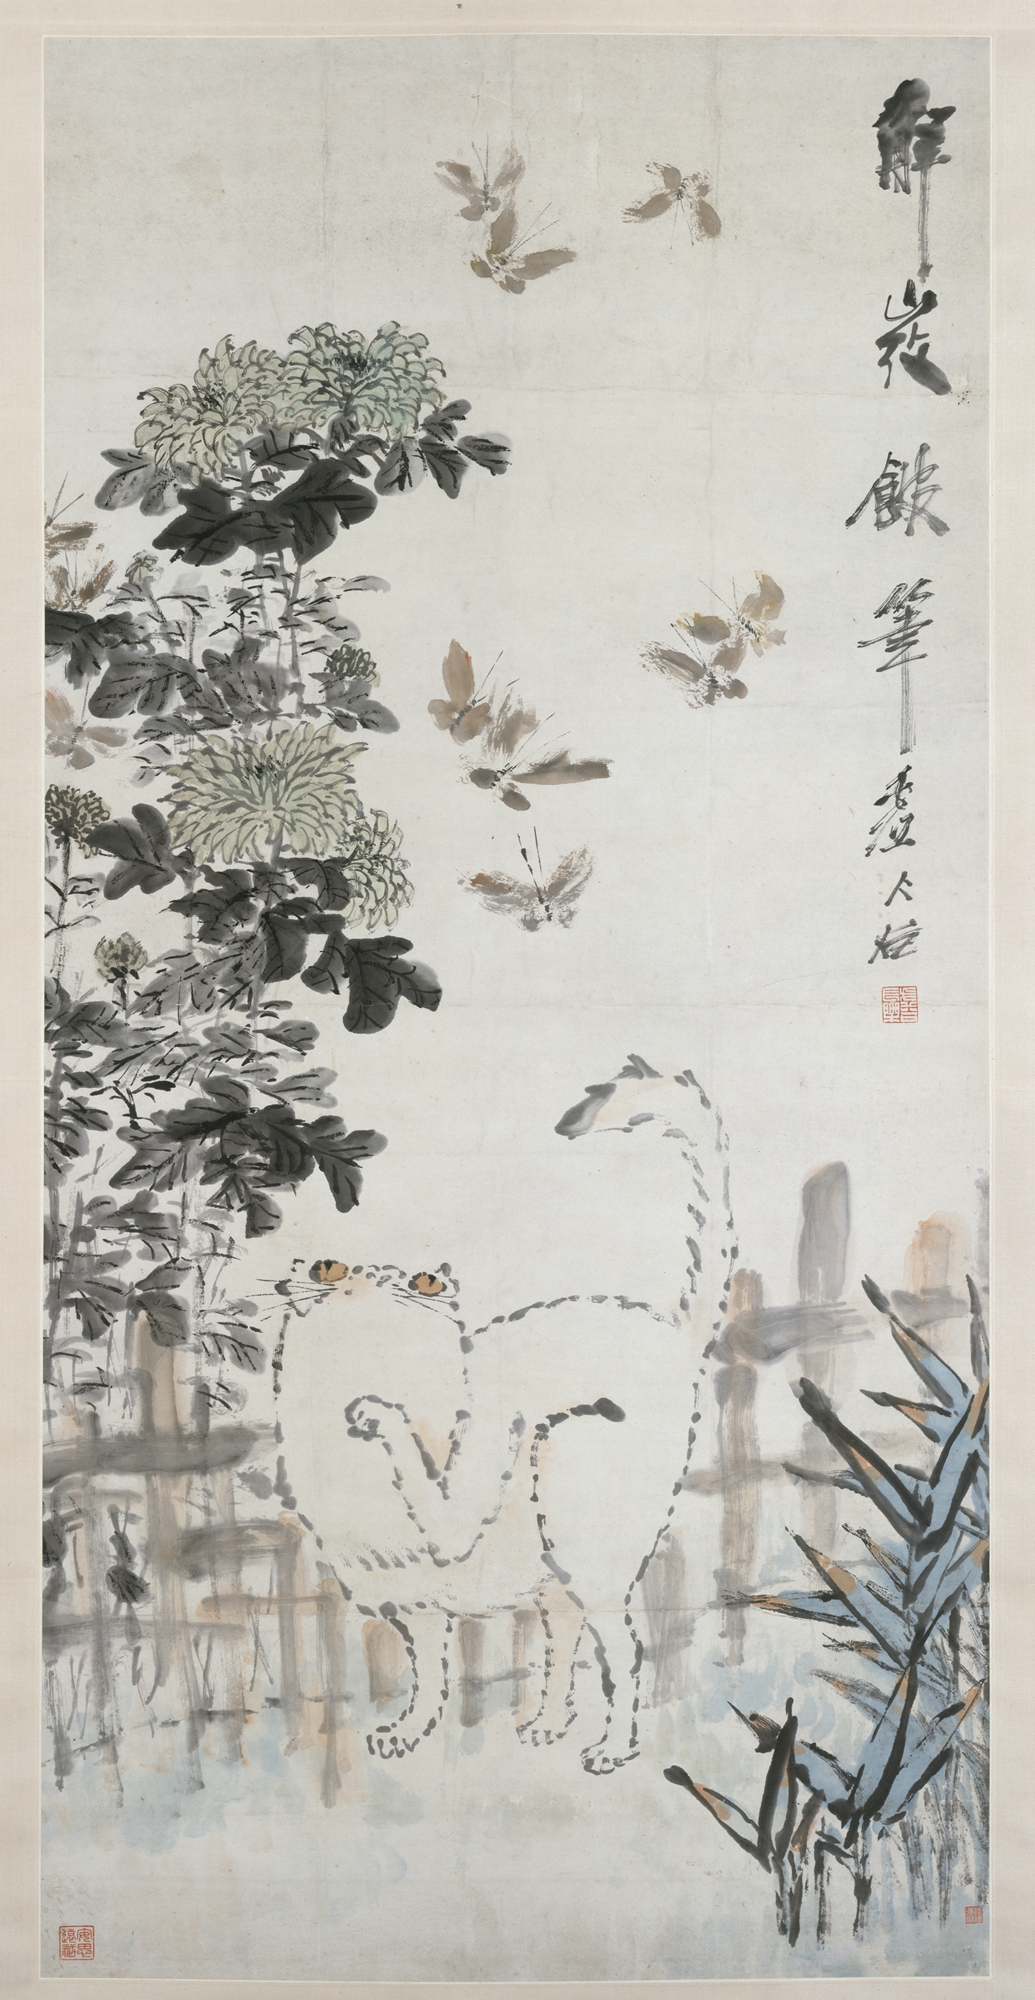 Katze und Schmetterling by Xu Gu - 19. Jahrhundert - 133,4 x 65,4 cm Metropolitan Museum of Art